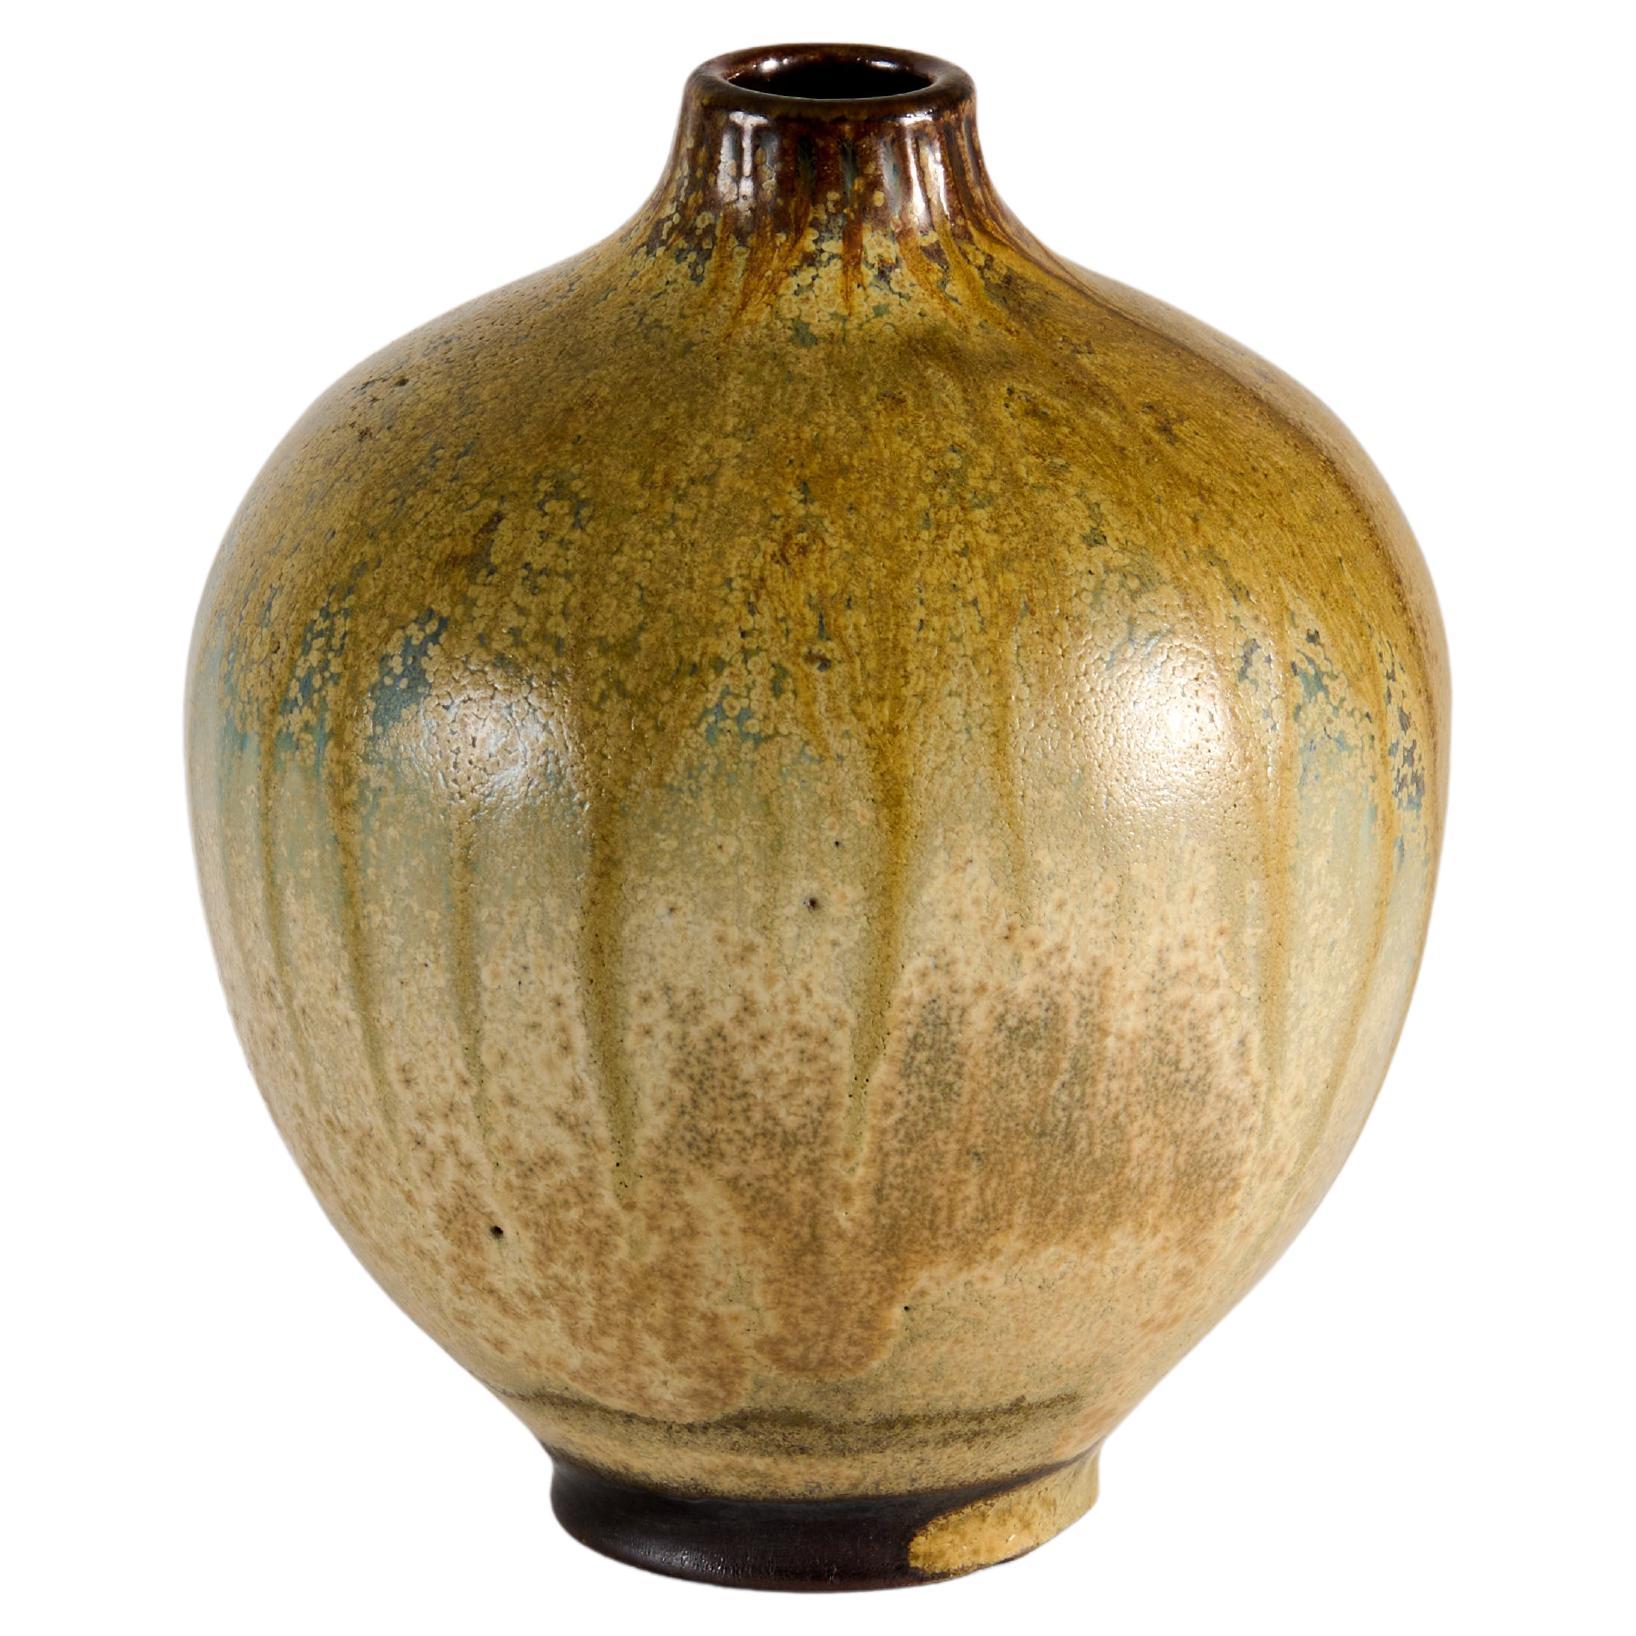 Ceramic Vase with Poured Ochre Glaze, Wallåkra, Sweden, 1960s